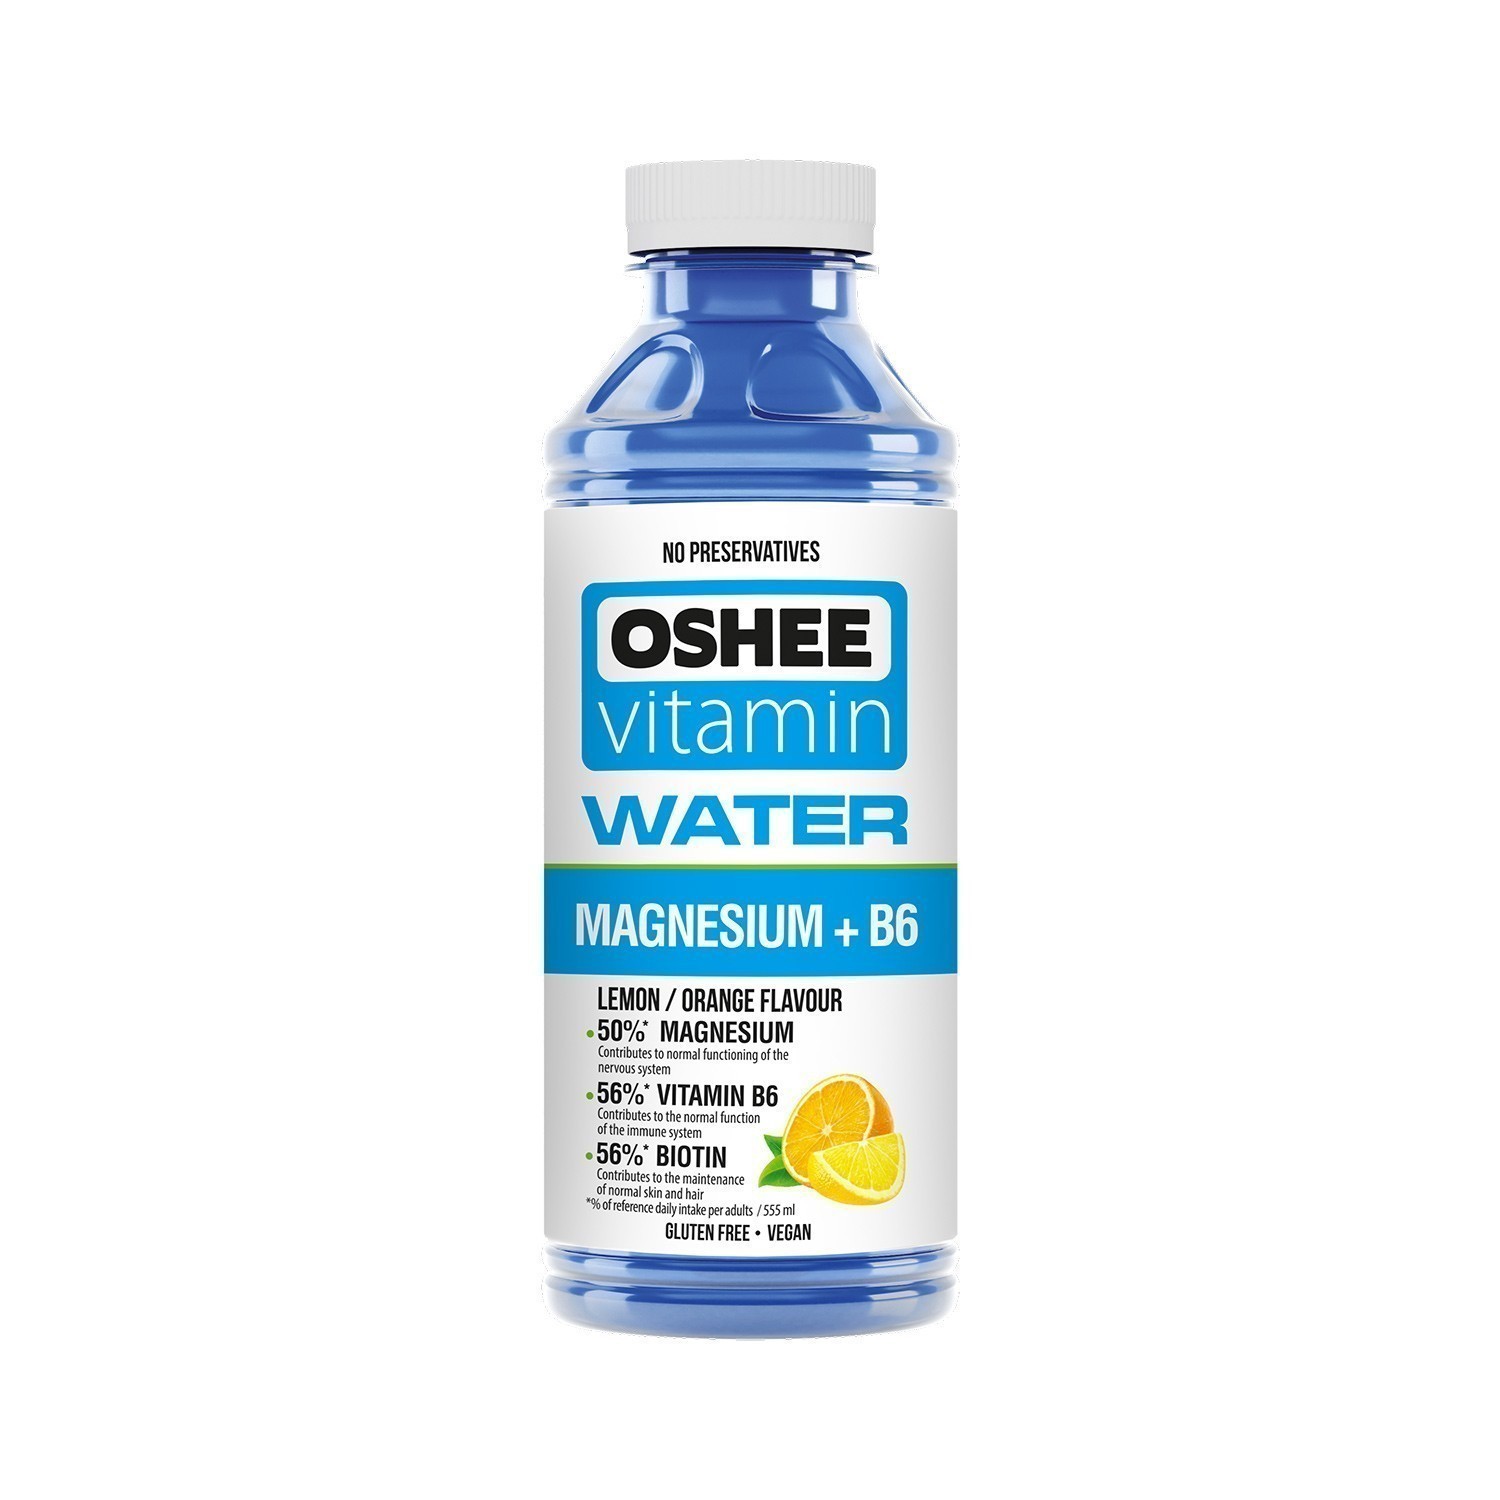 OSHEE Vitamin H2O Magnesium + B6 